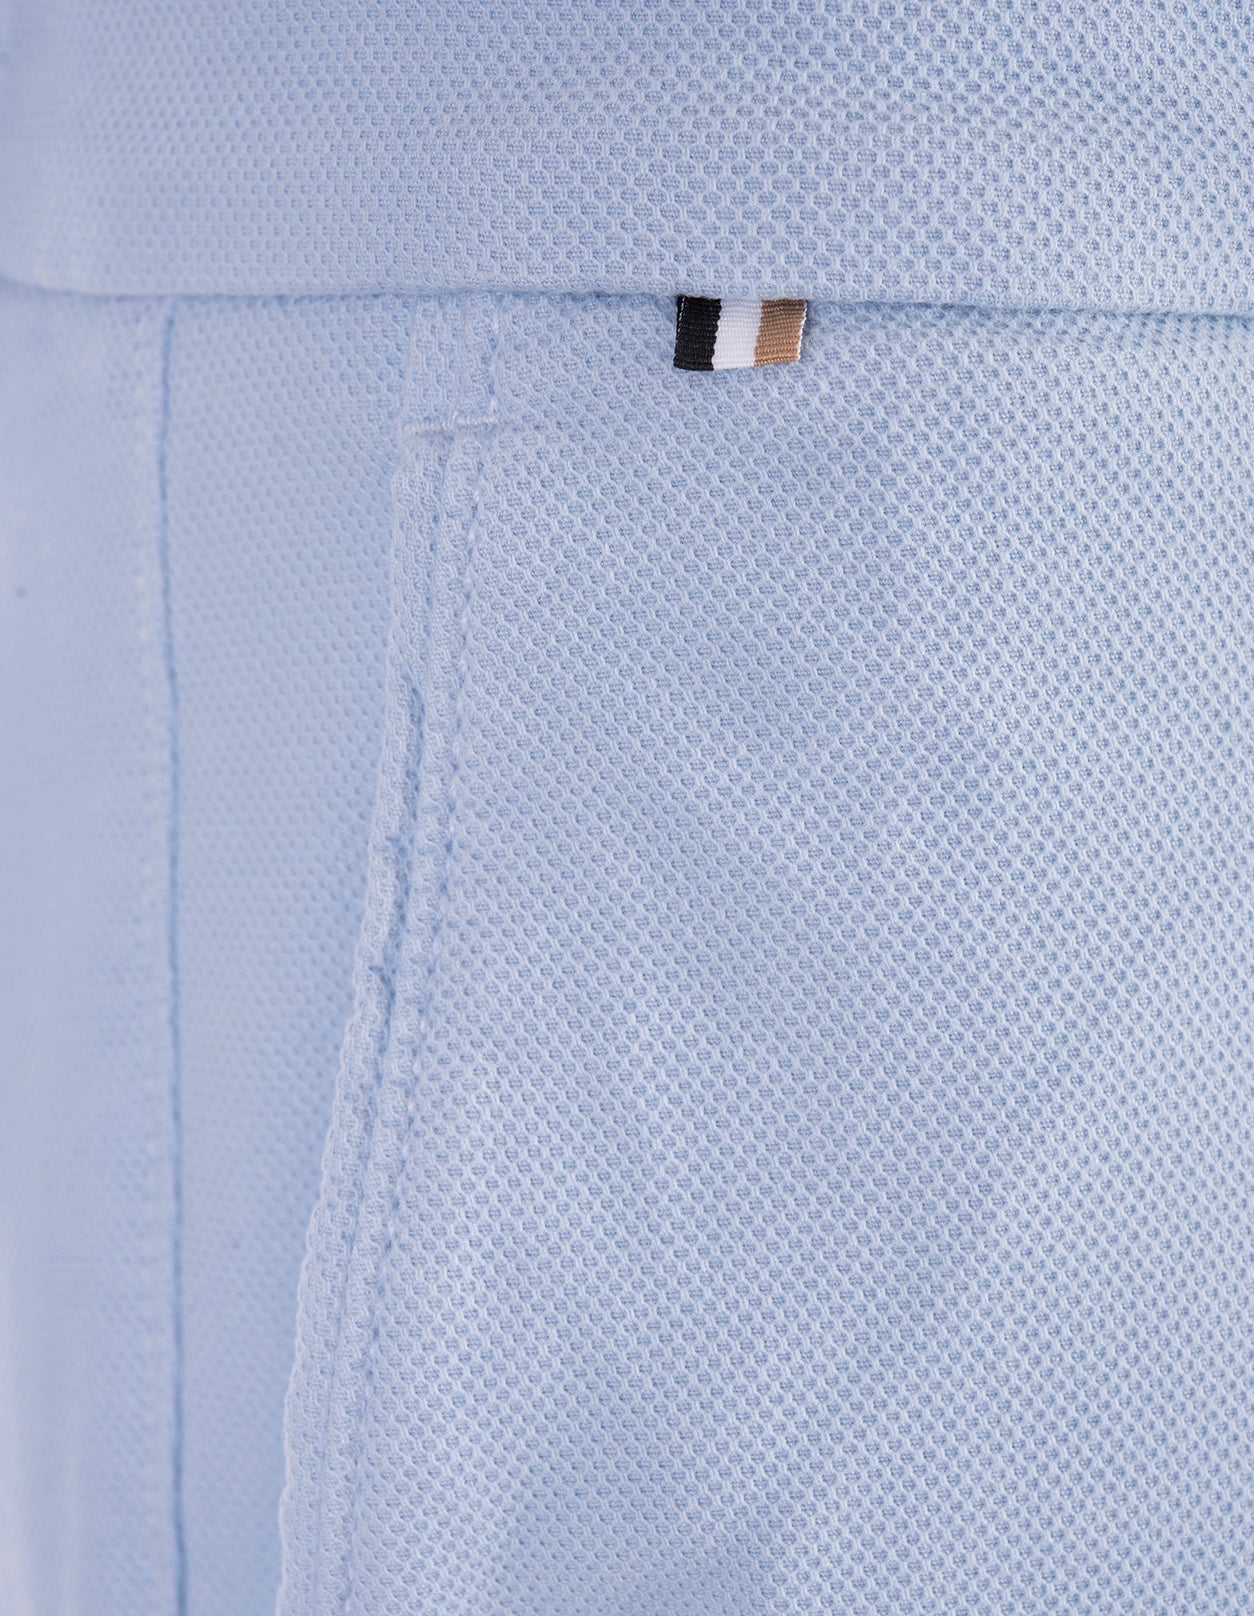 BOSS - KANE-SHORTS - Light Pastel Blue Stretch Cotton Regular Fit Shorts 50512527 450